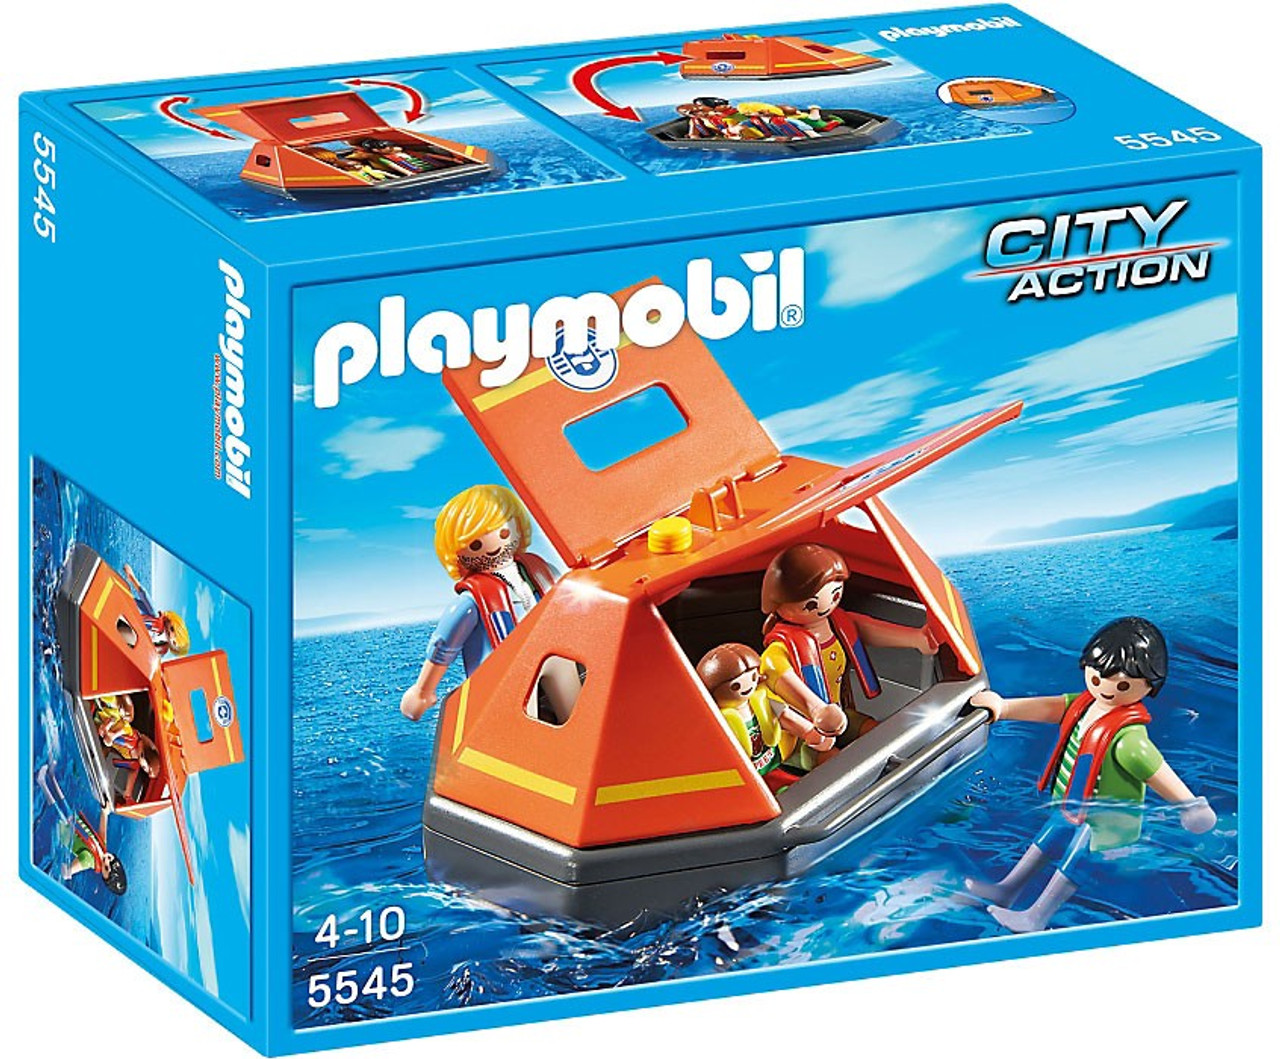 Playmobil City Action Life Raft Set 5545 Toywiz - my life raft roblox